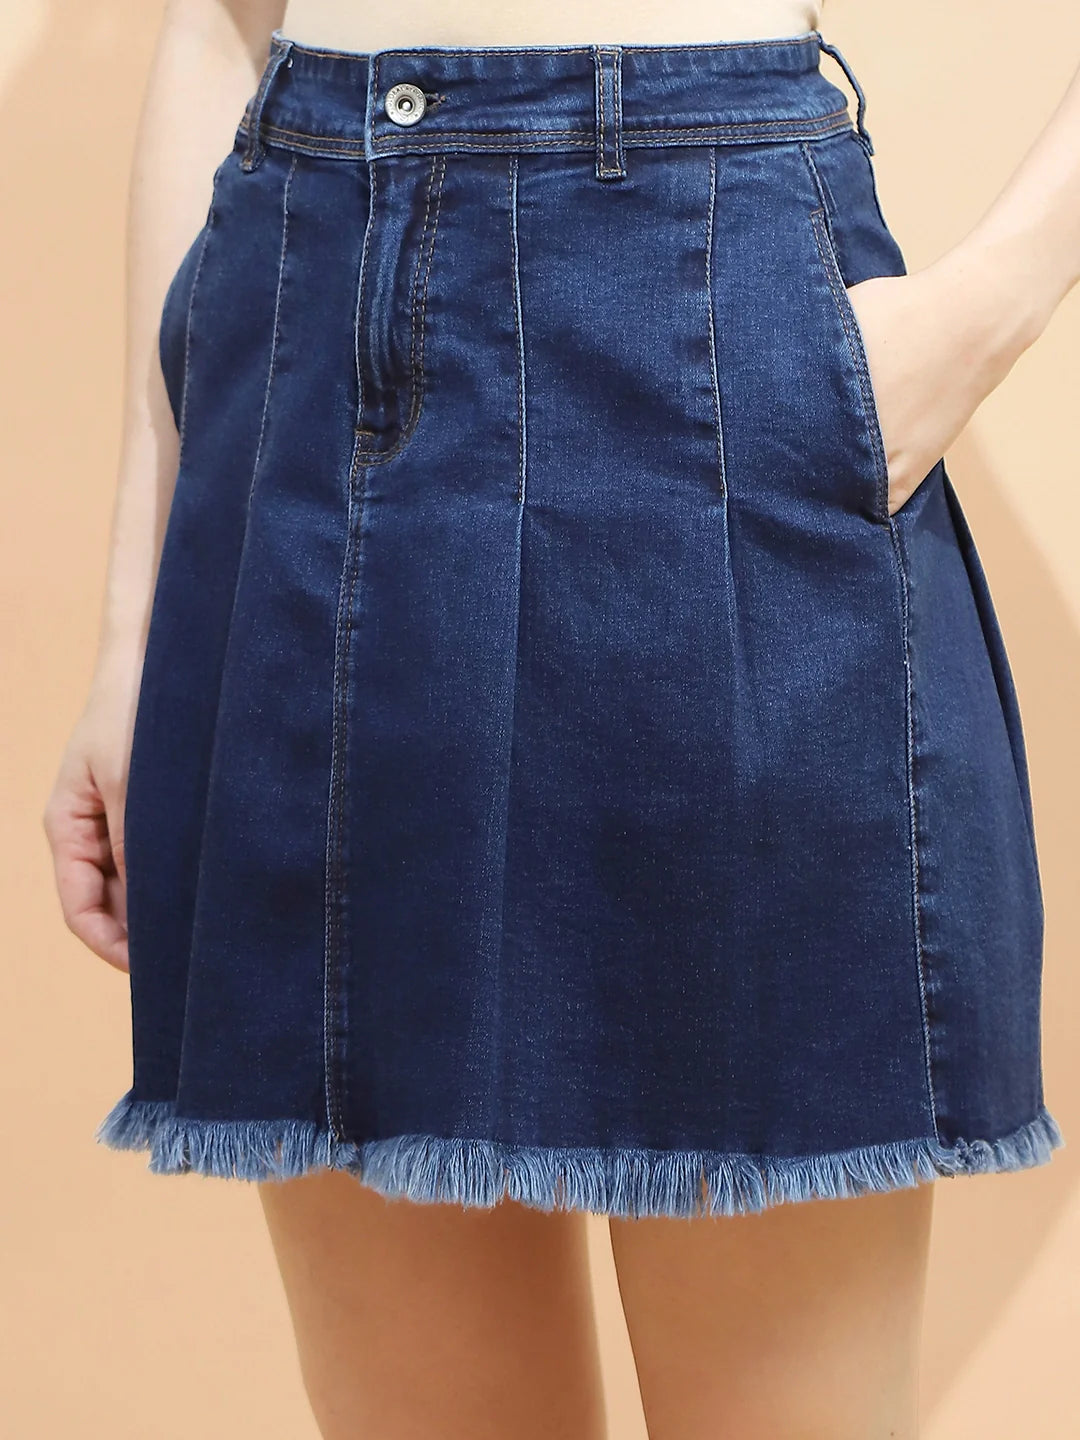 Dark Blue Cotton Blend Regular Fit Skirt For Women